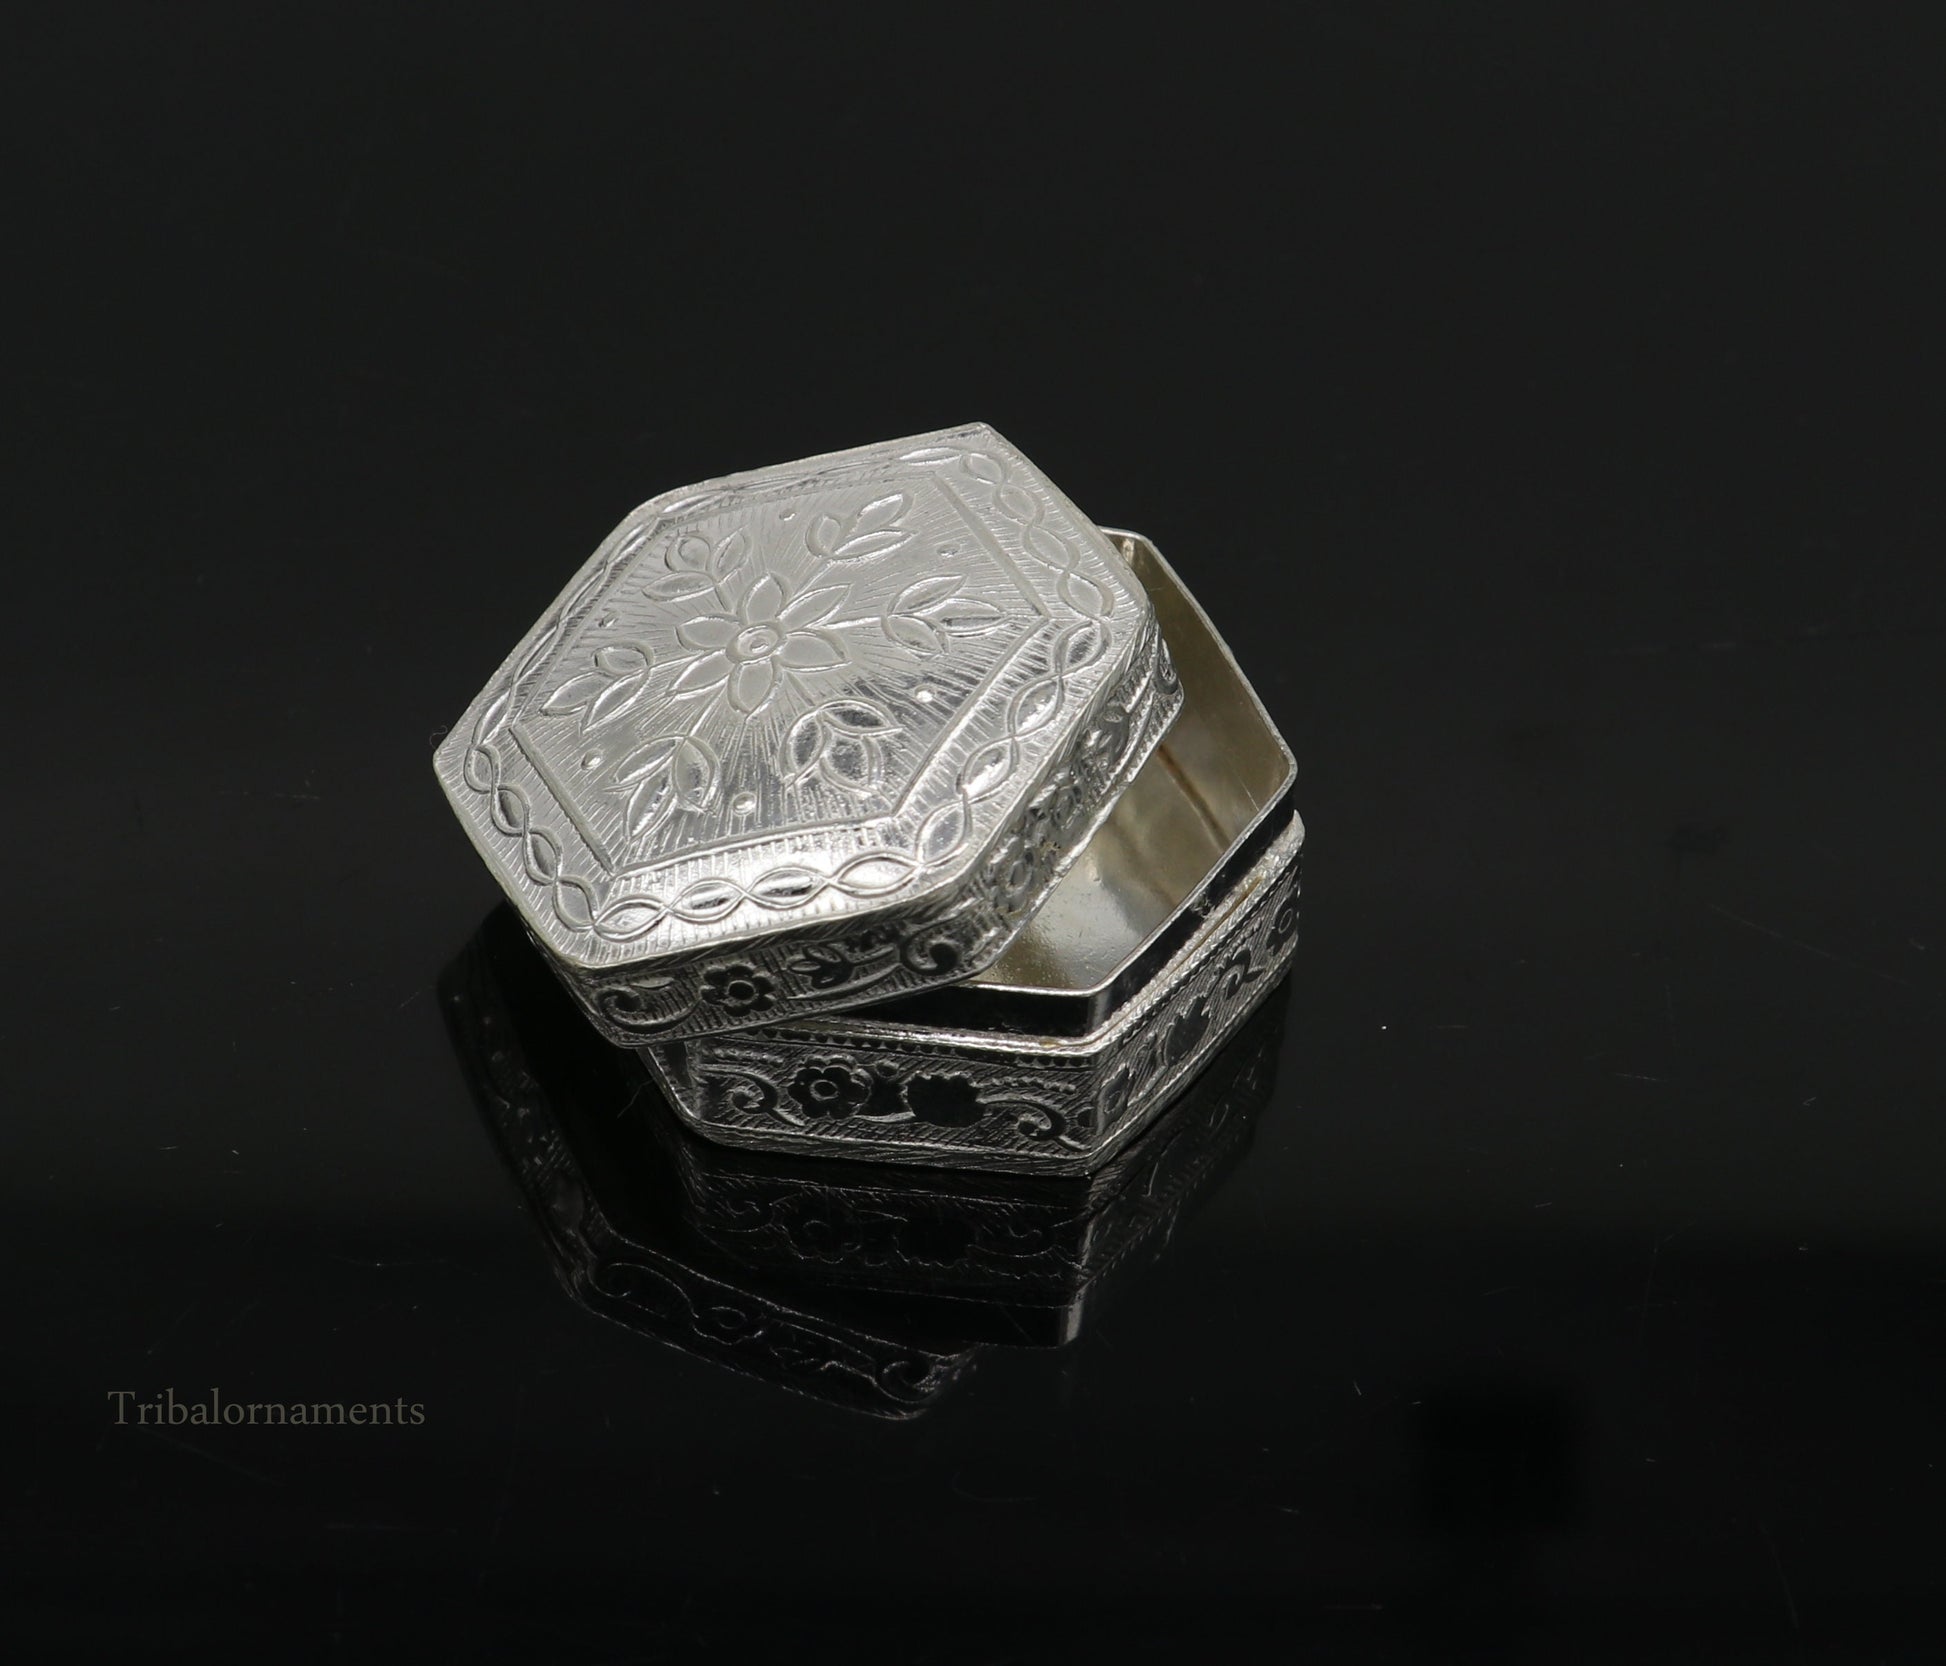 925 sterling silver trinket box, kajal box/casket box bridal polygon shape sindur box collection, container box, eyeliner box gifting stb180 - TRIBAL ORNAMENTS